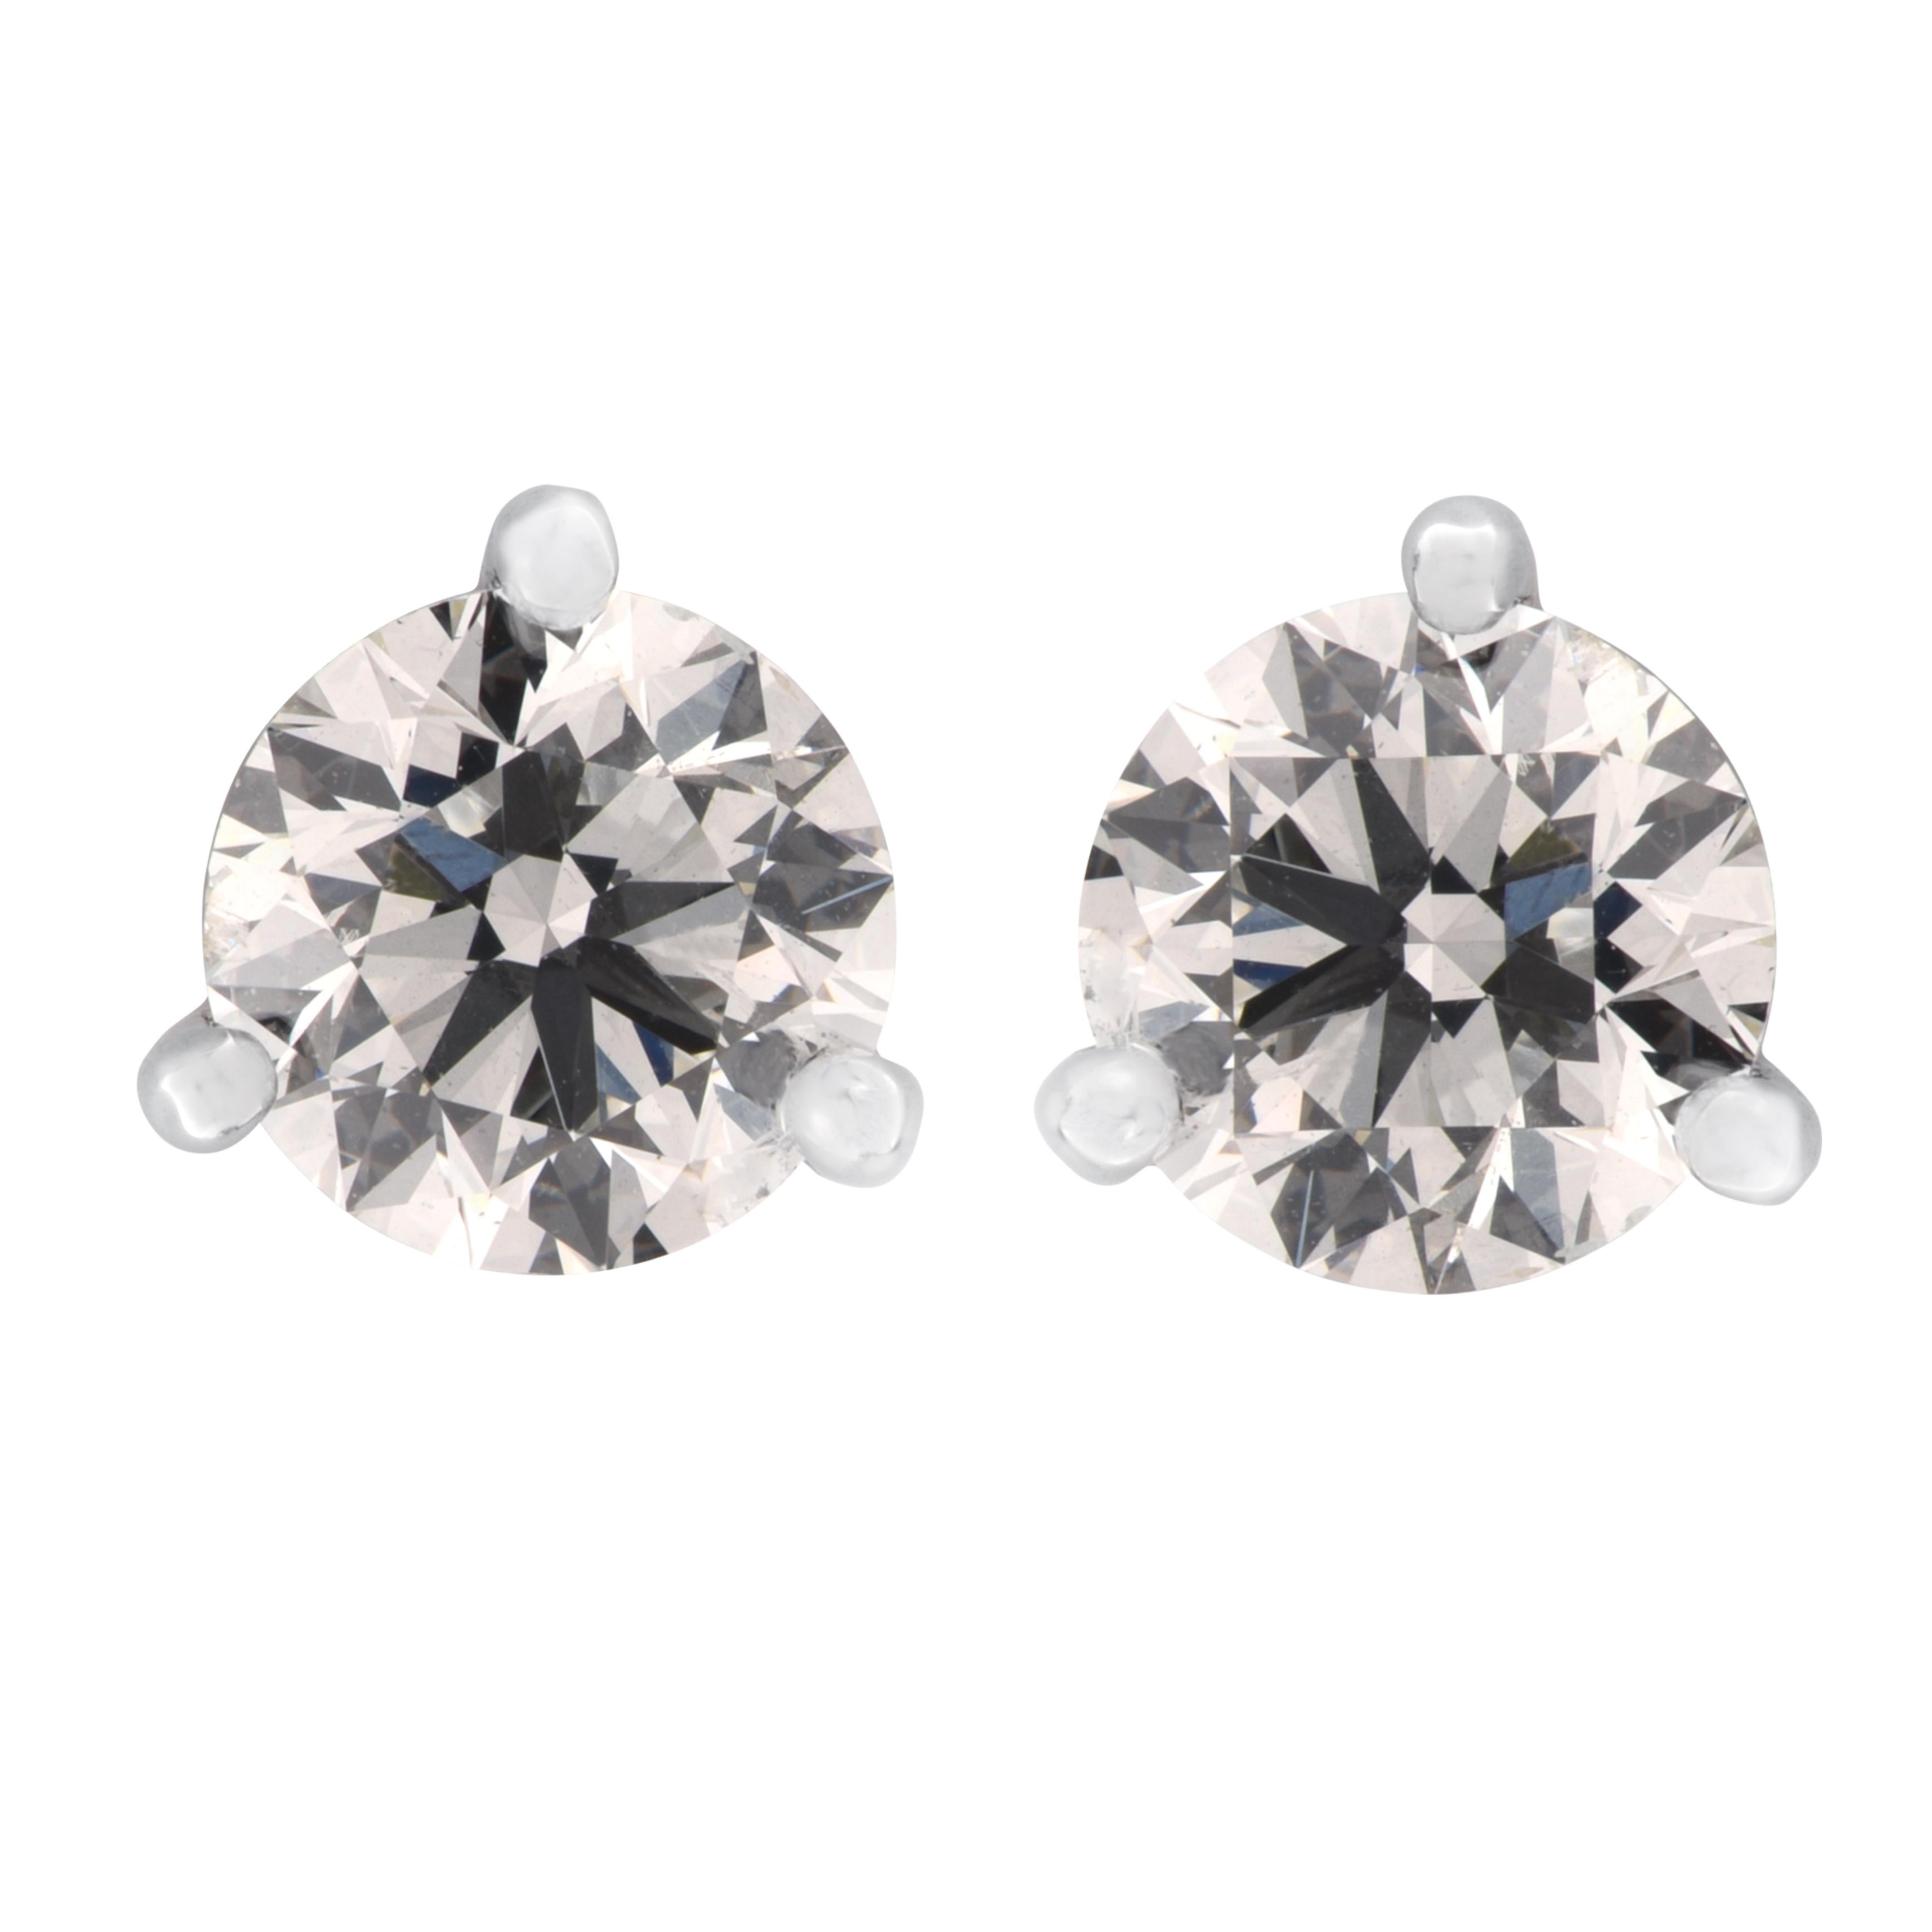 Round Cut Vivid Diamonds GIA Certified 1.41 Carat Diamond Stud Earrings